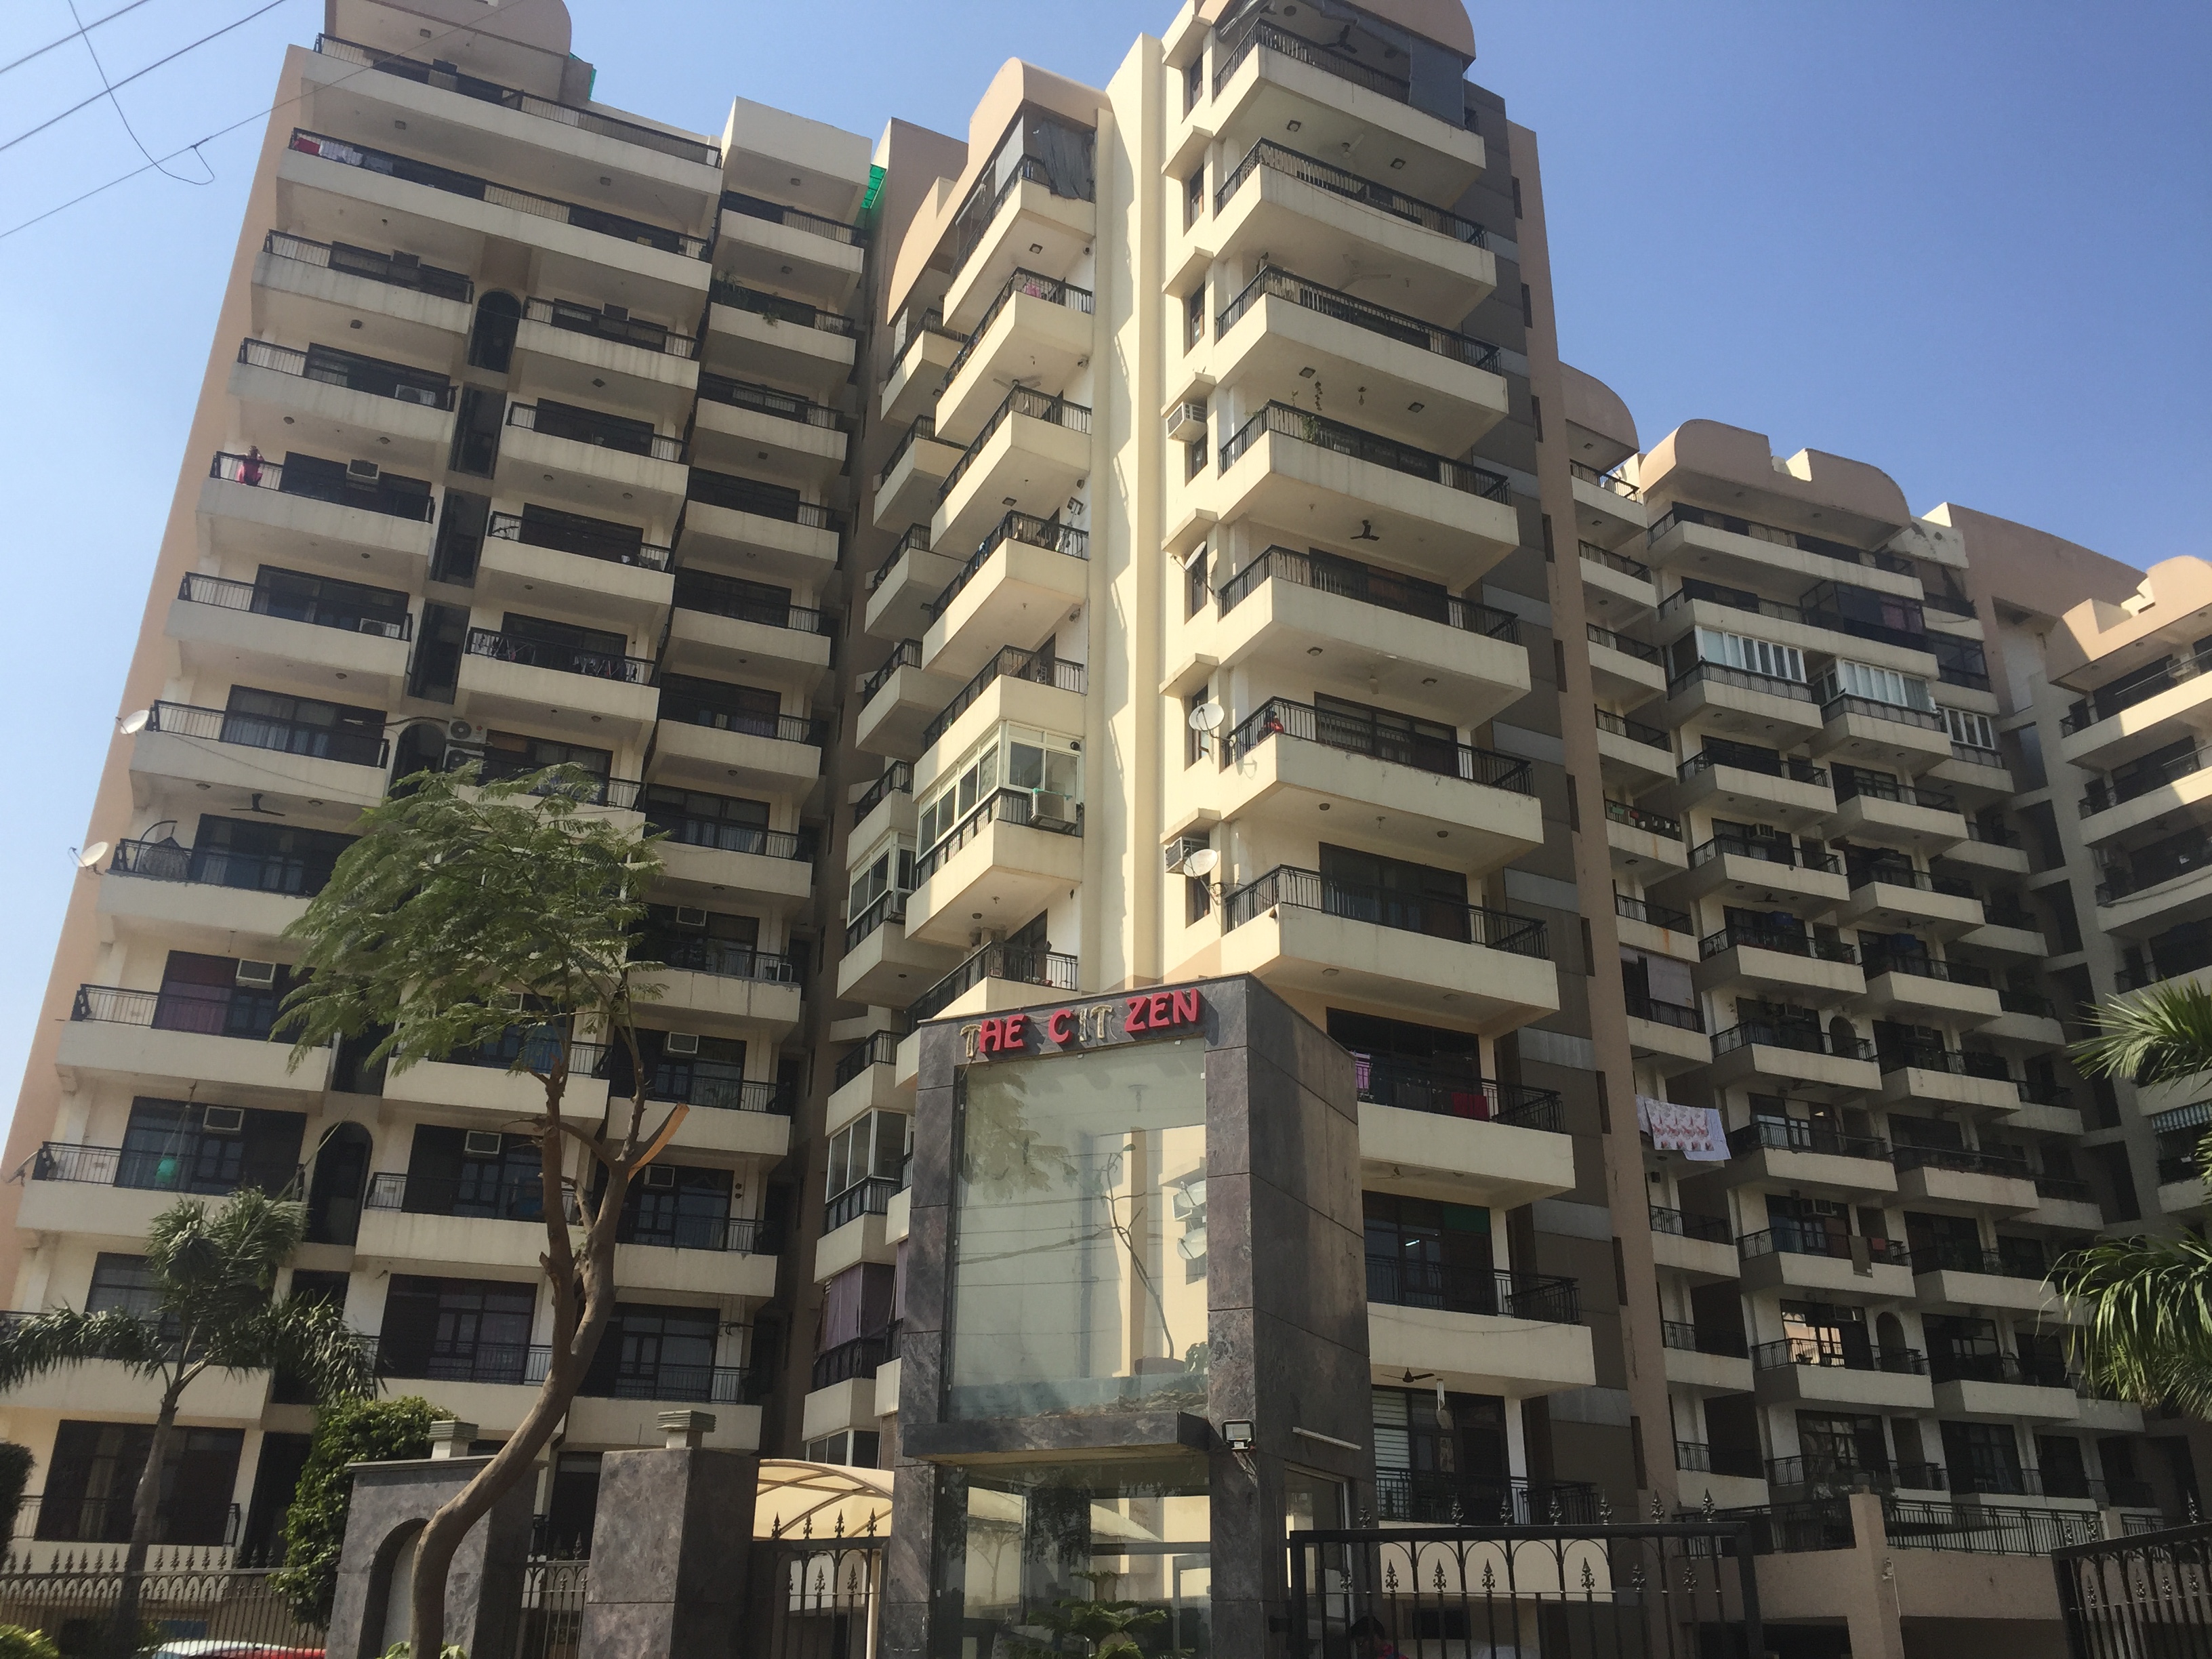 Citizen apartment Sector 51 Gurgaon Resale Price List, Brochure, Floor  Plan, Location Map & Reviews